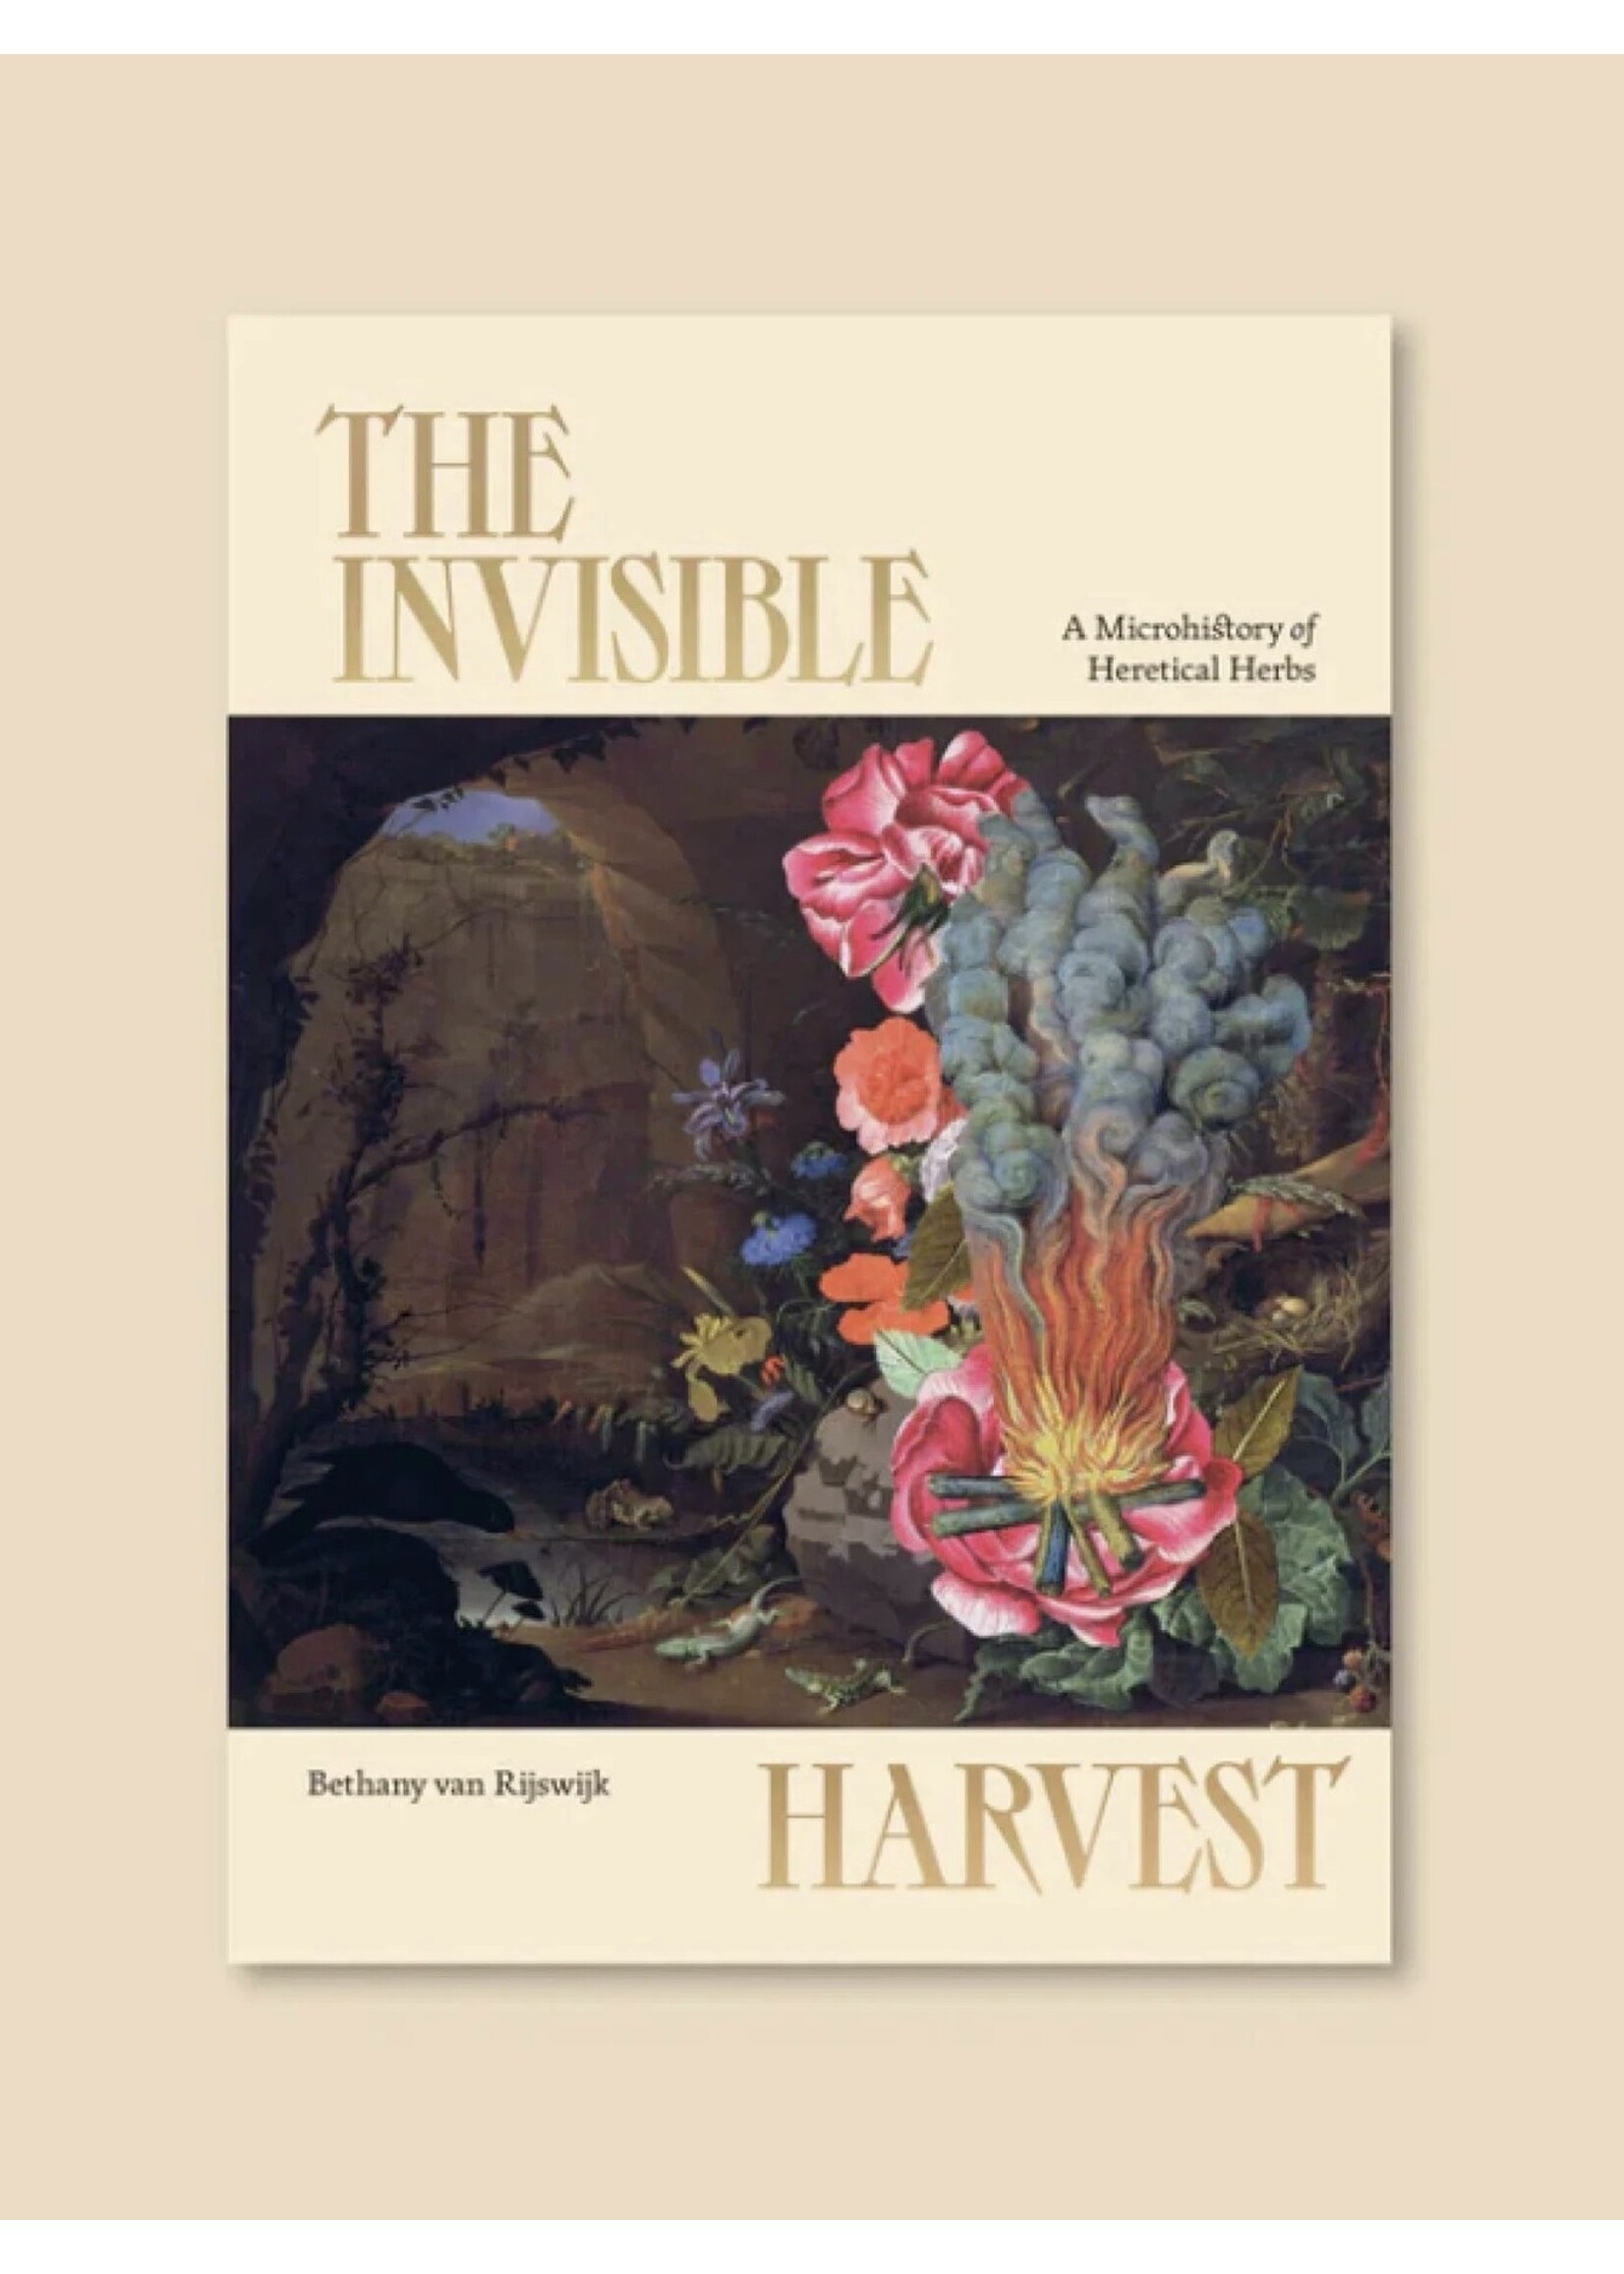 Broccoli "The Invisible Harvest" by Broccoli